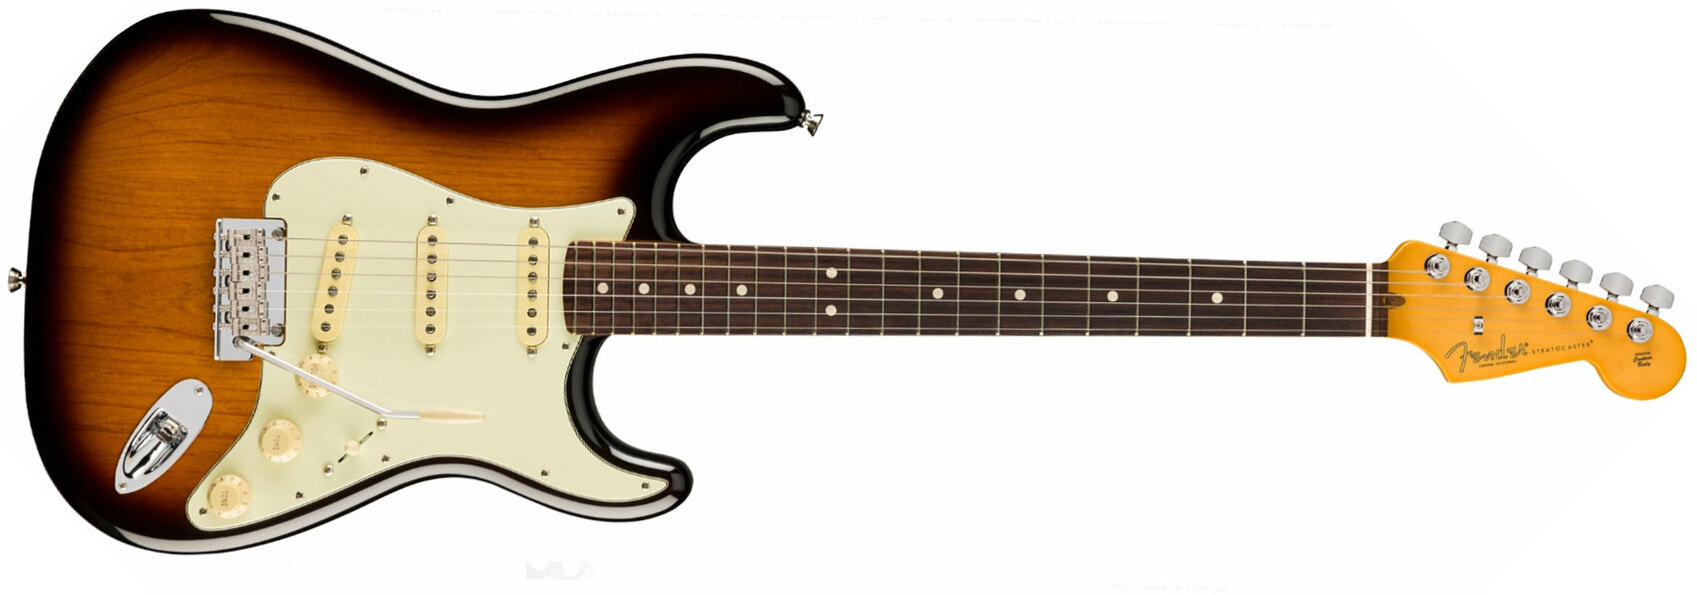 Fender Strat American Professional Ii 70th Anniversary Usa 3s Trem Rw - 2-color Sunburst - Elektrische gitaar in Str-vorm - Main picture